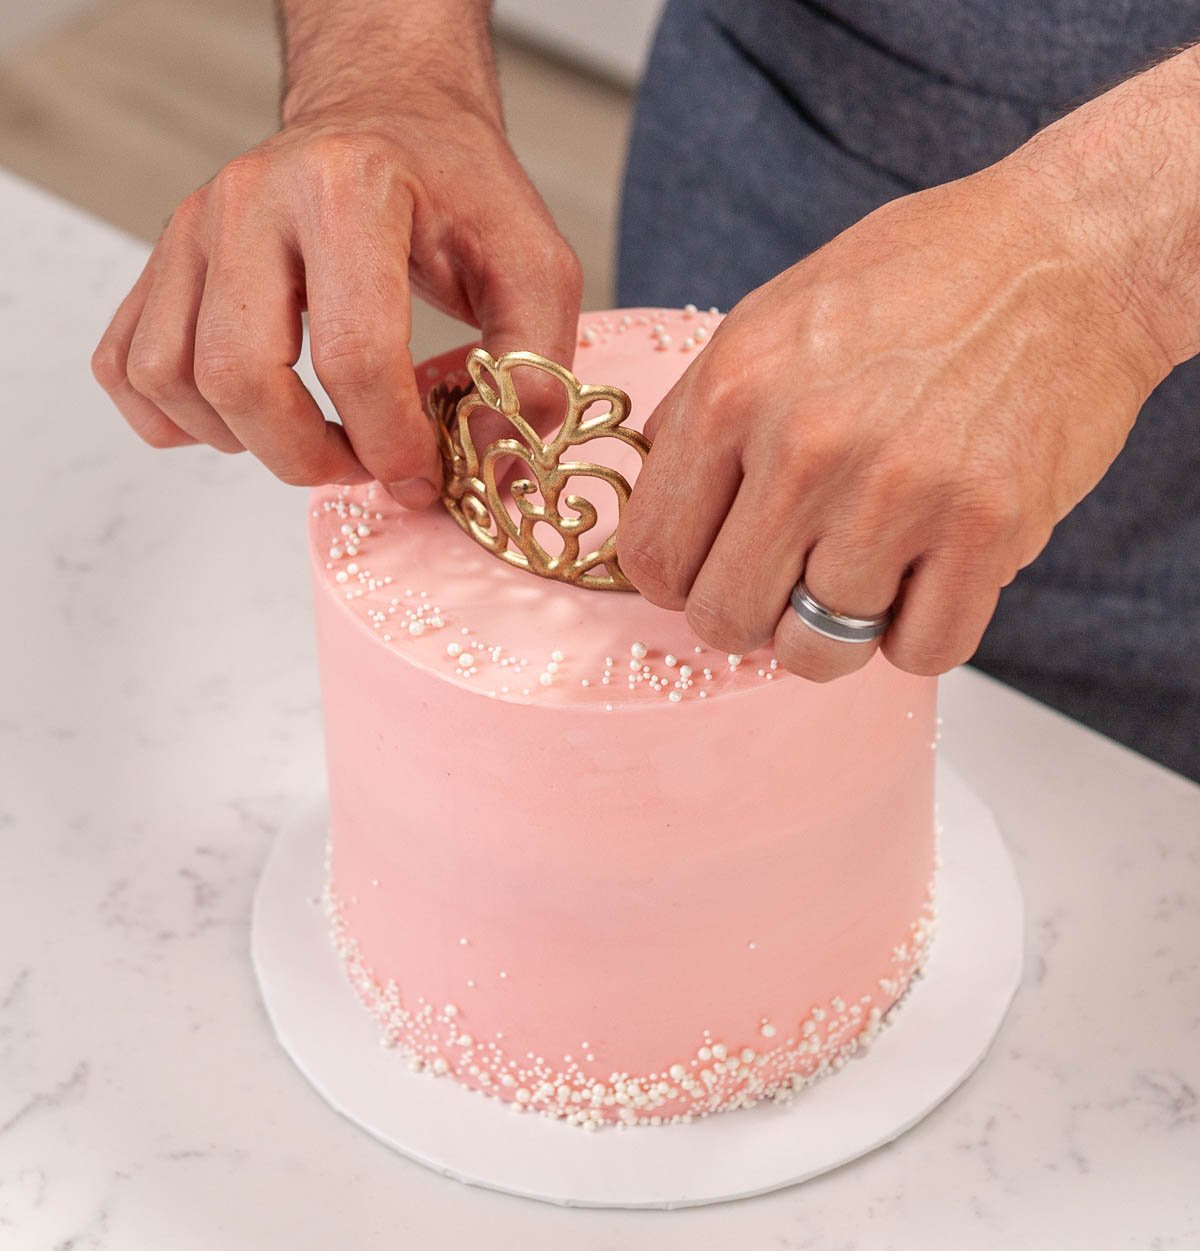 placing a chocolate tiara on top of the cake